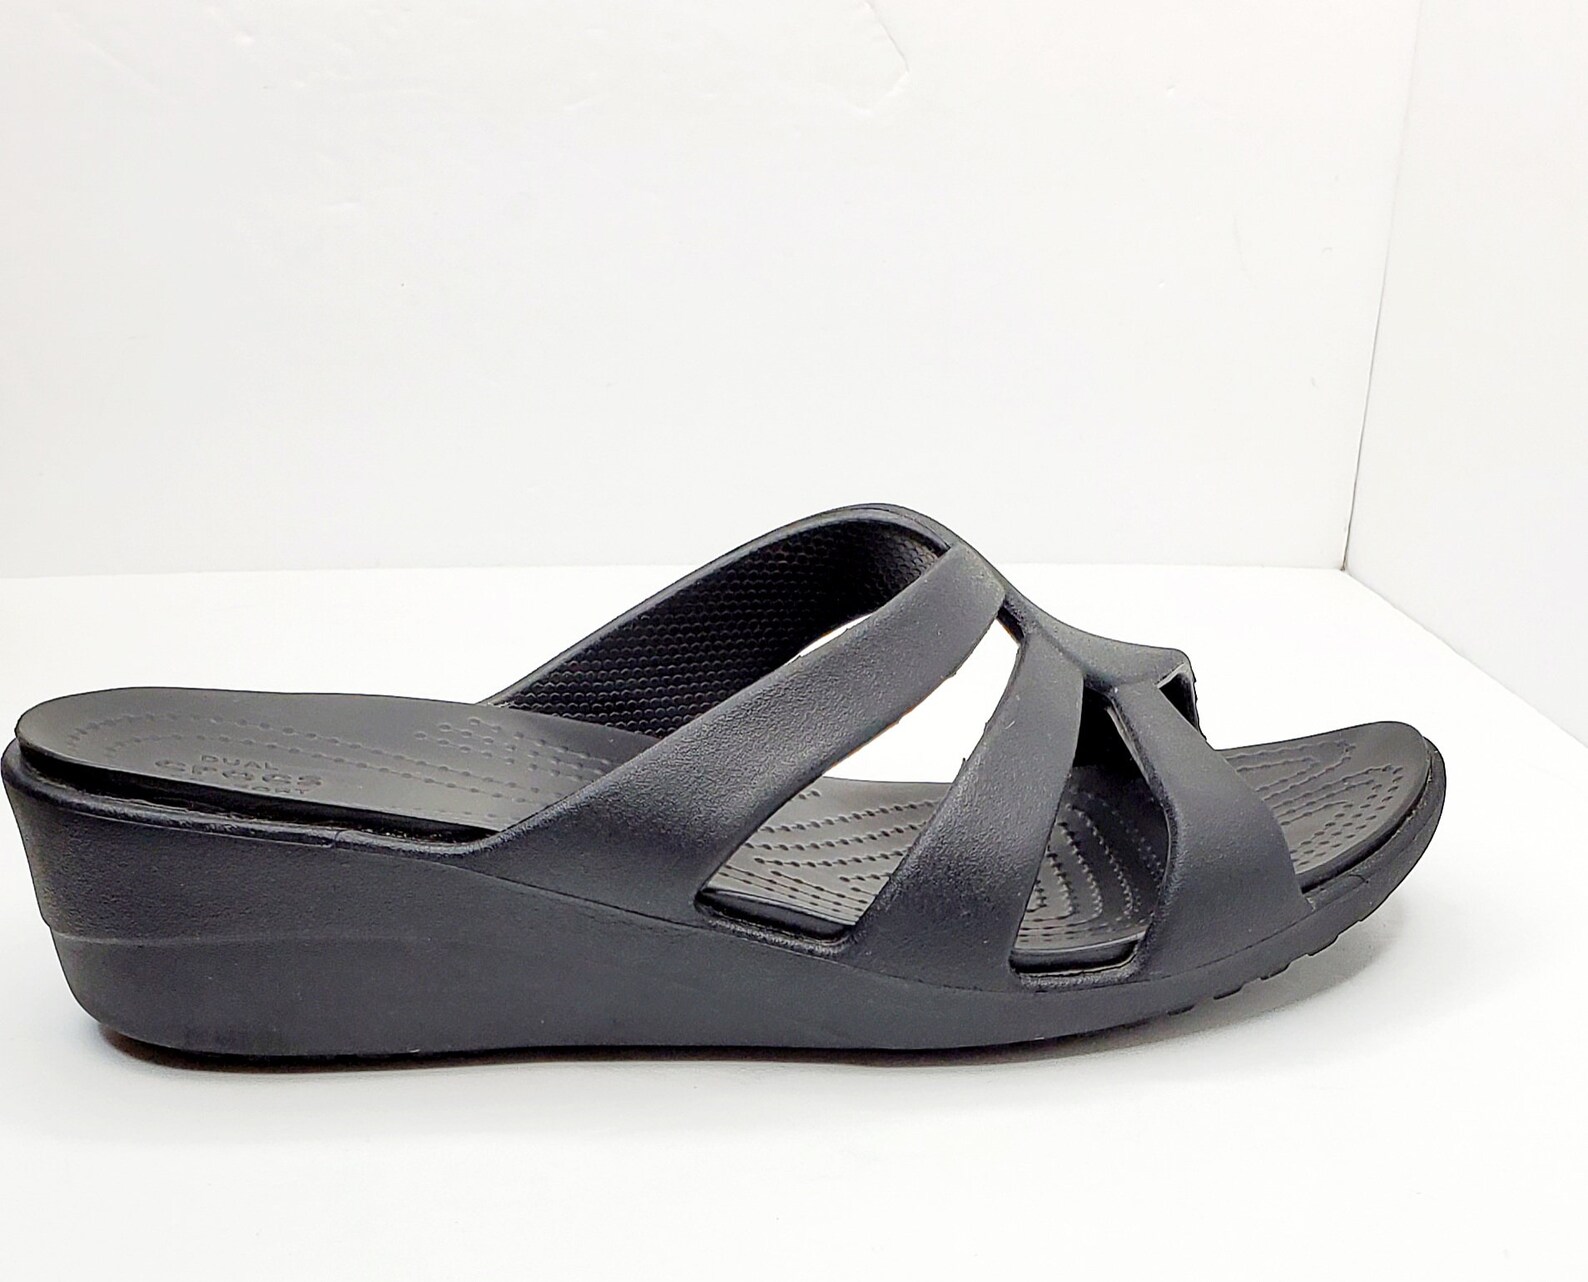 CROCS Brand Dual Comfort Sandals | Etsy